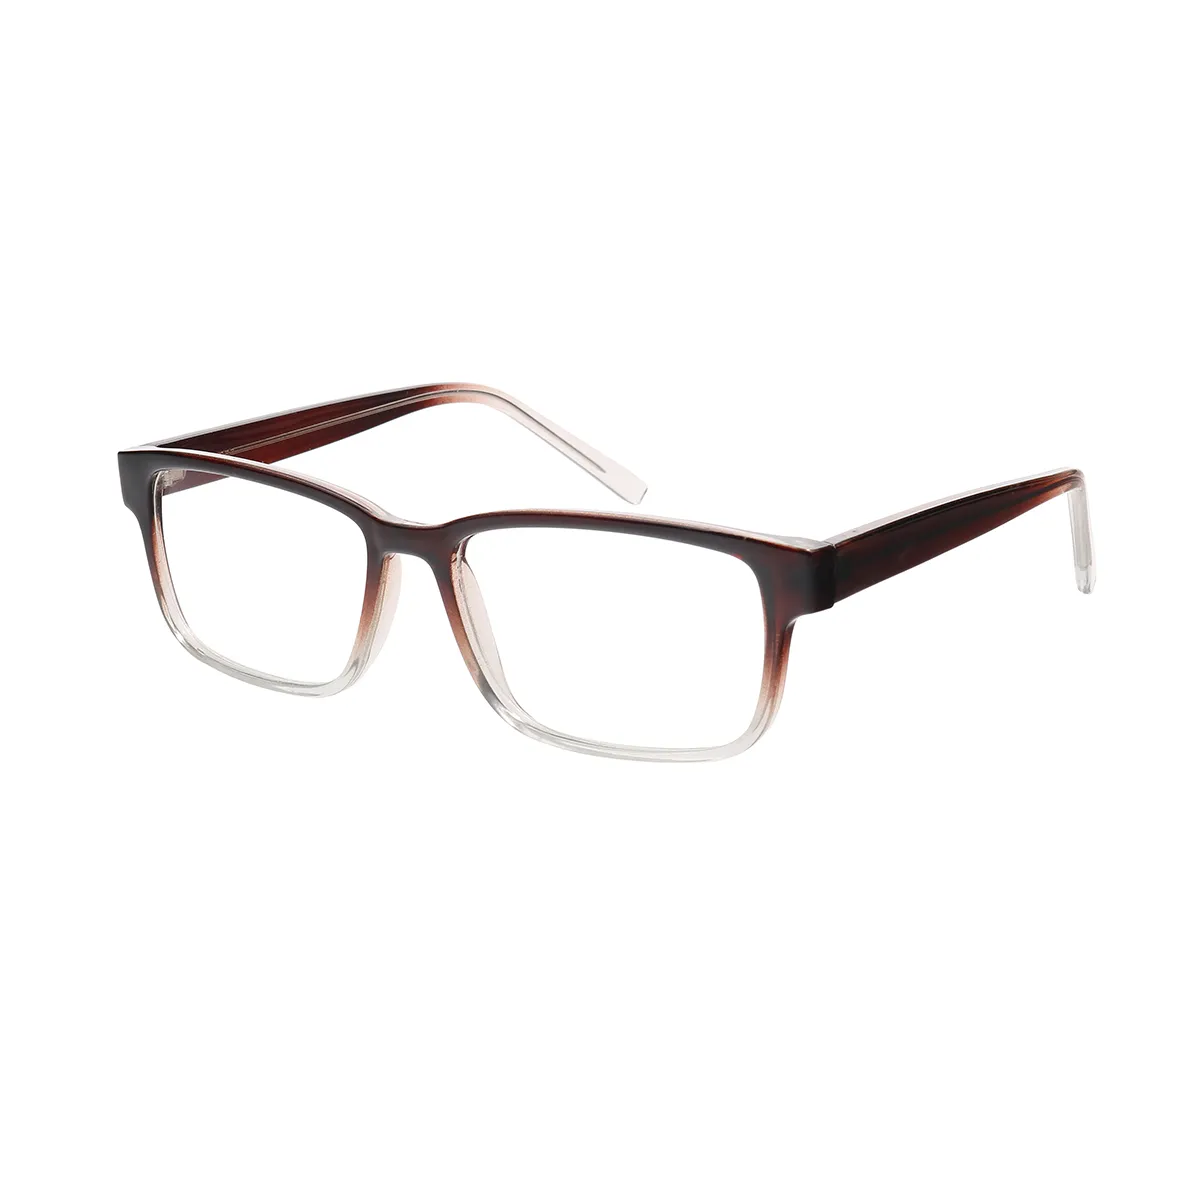 Randy - Rectangle Brown-Transparent Glasses for Men